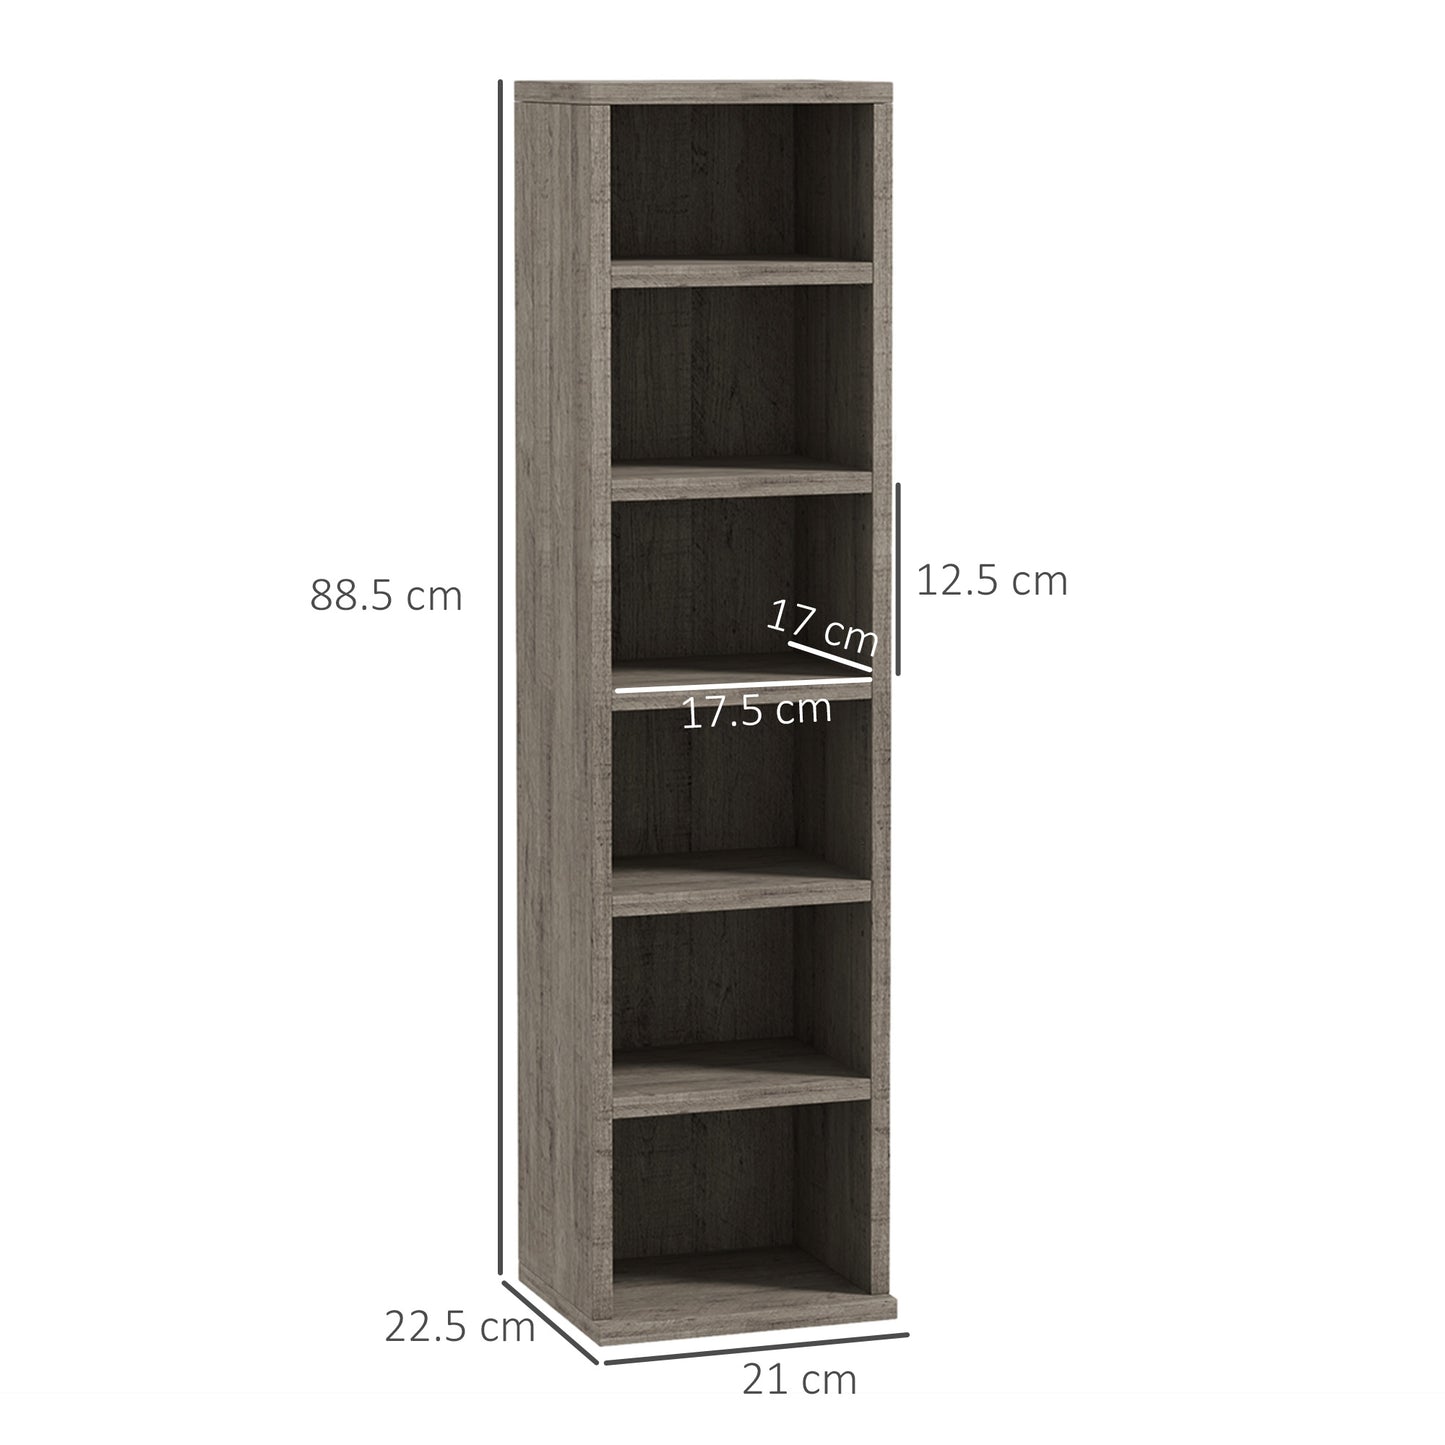 HOMCOM CD Media Display Shelf Unit Tower Rack with Adjustable Shelves, Set of 2